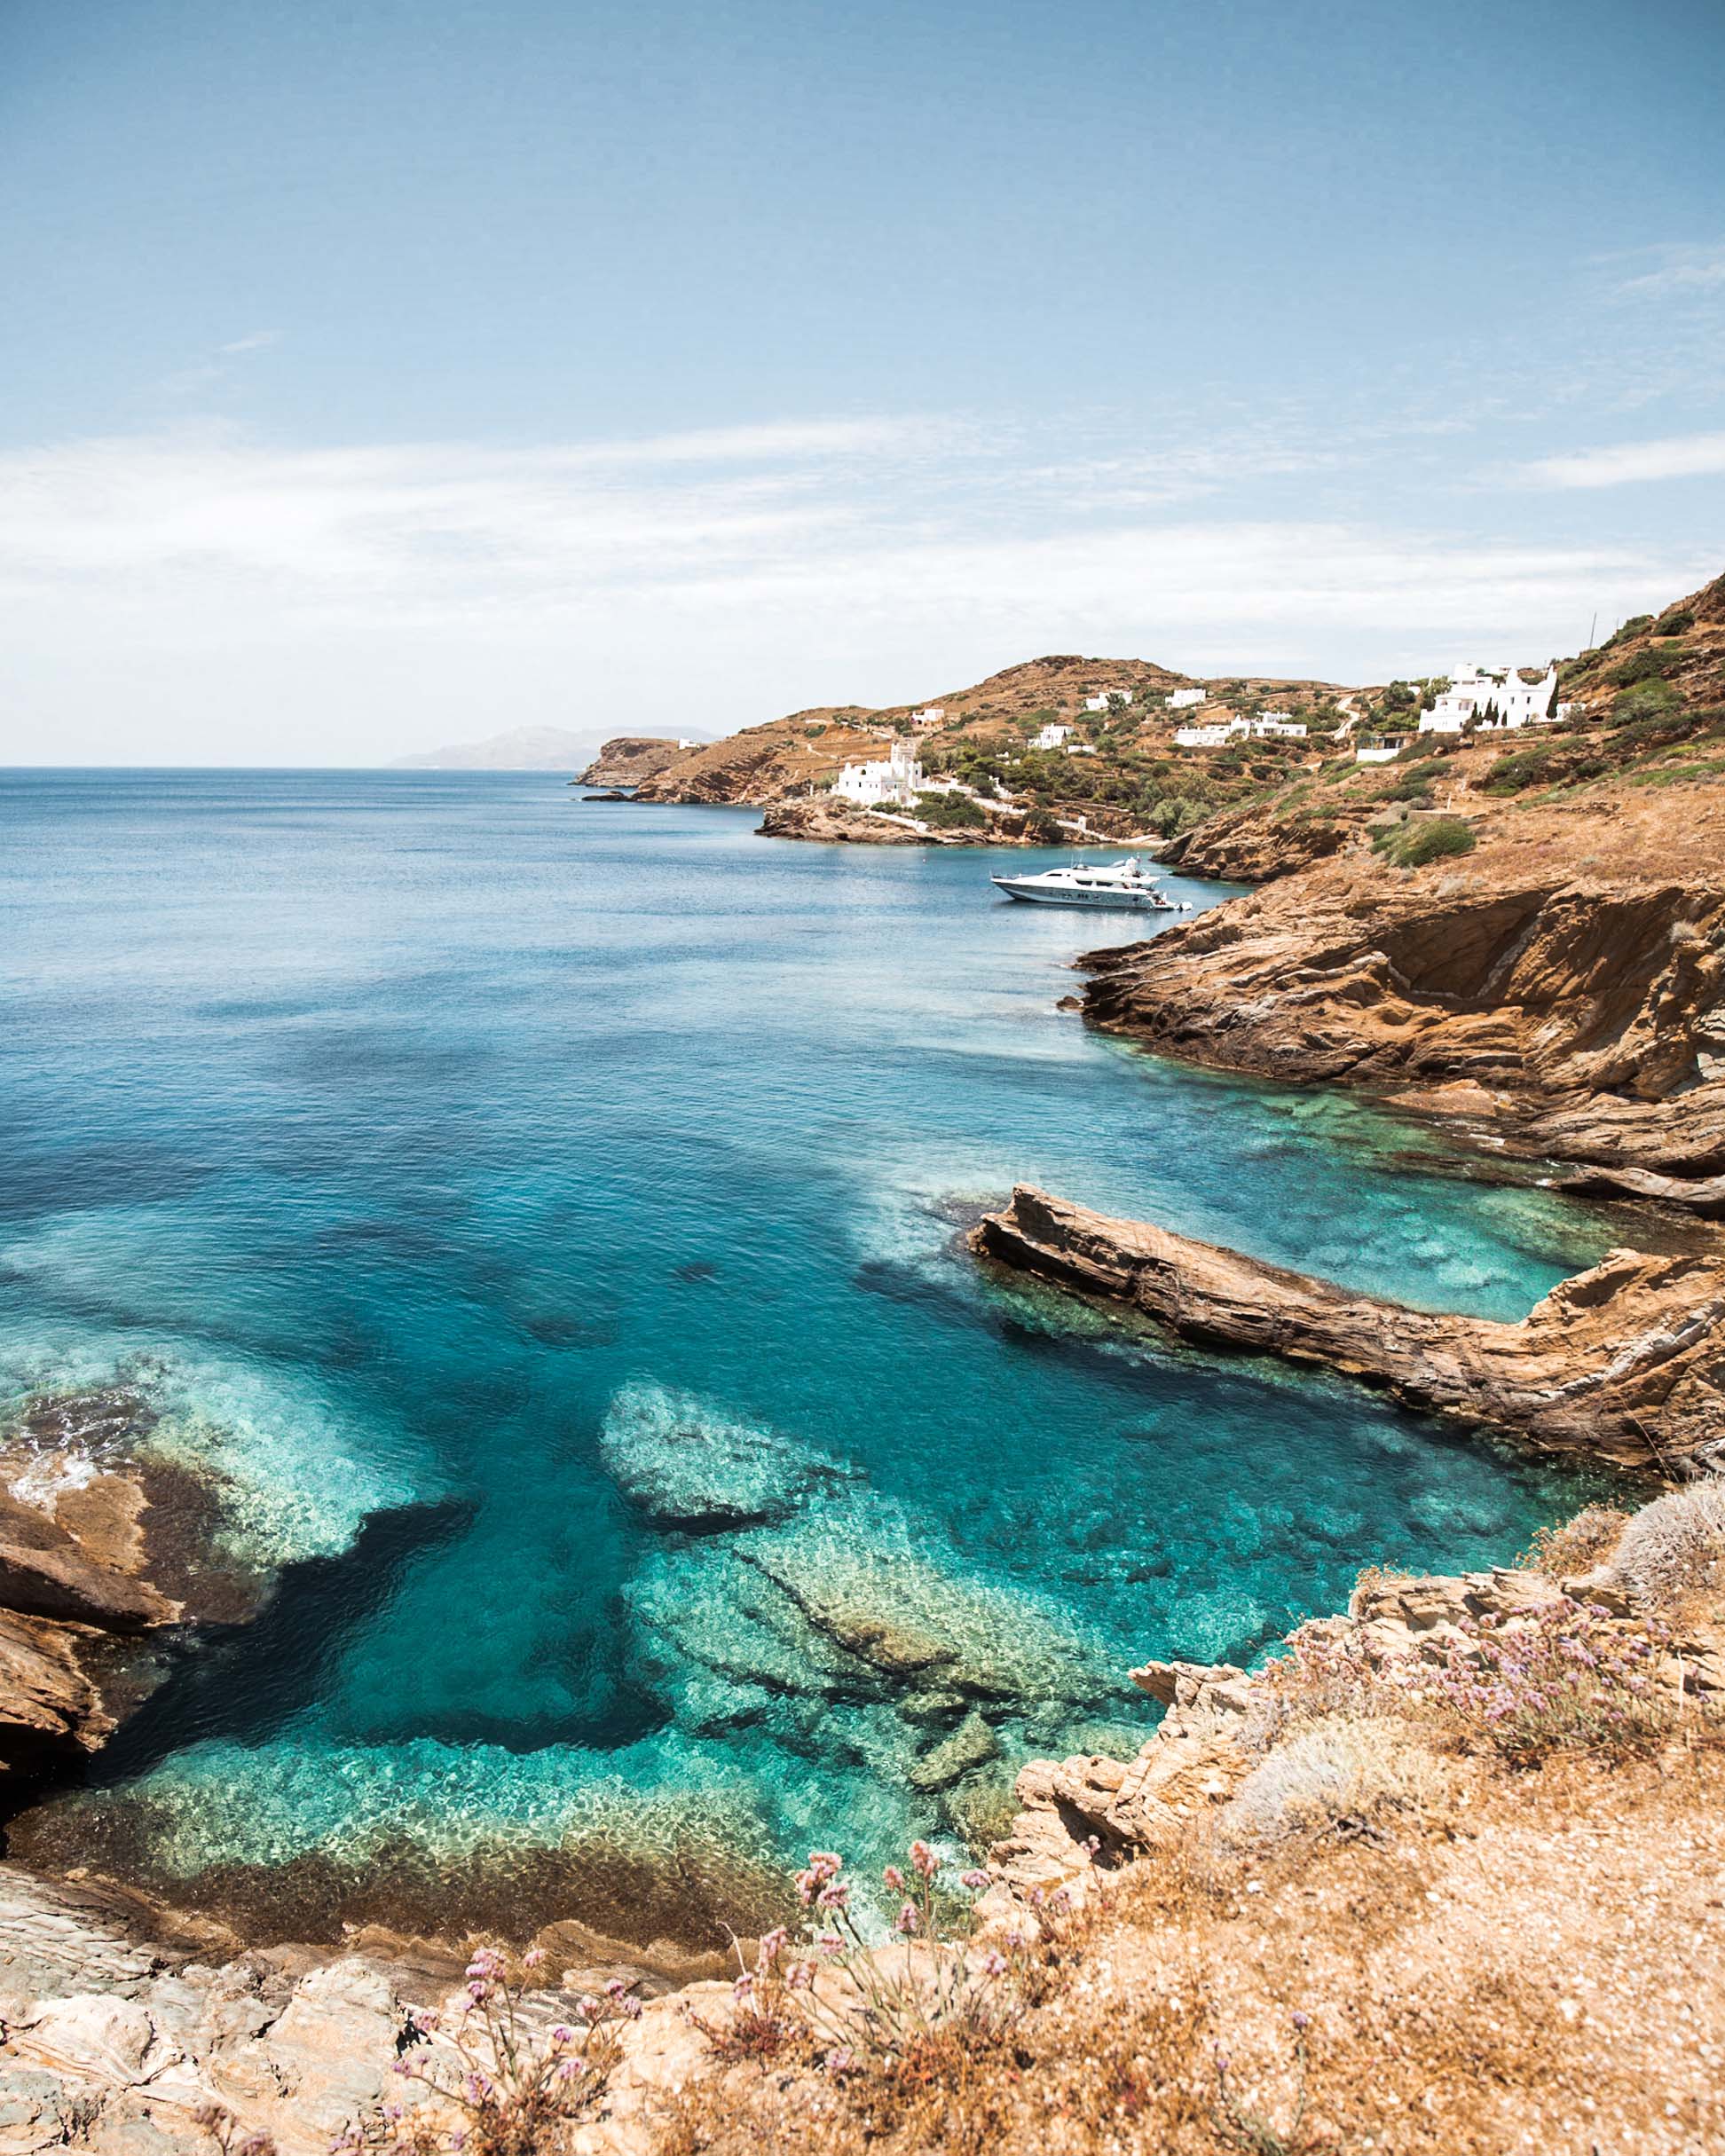 One of the best greek islands to visit - Ios via @haylsa